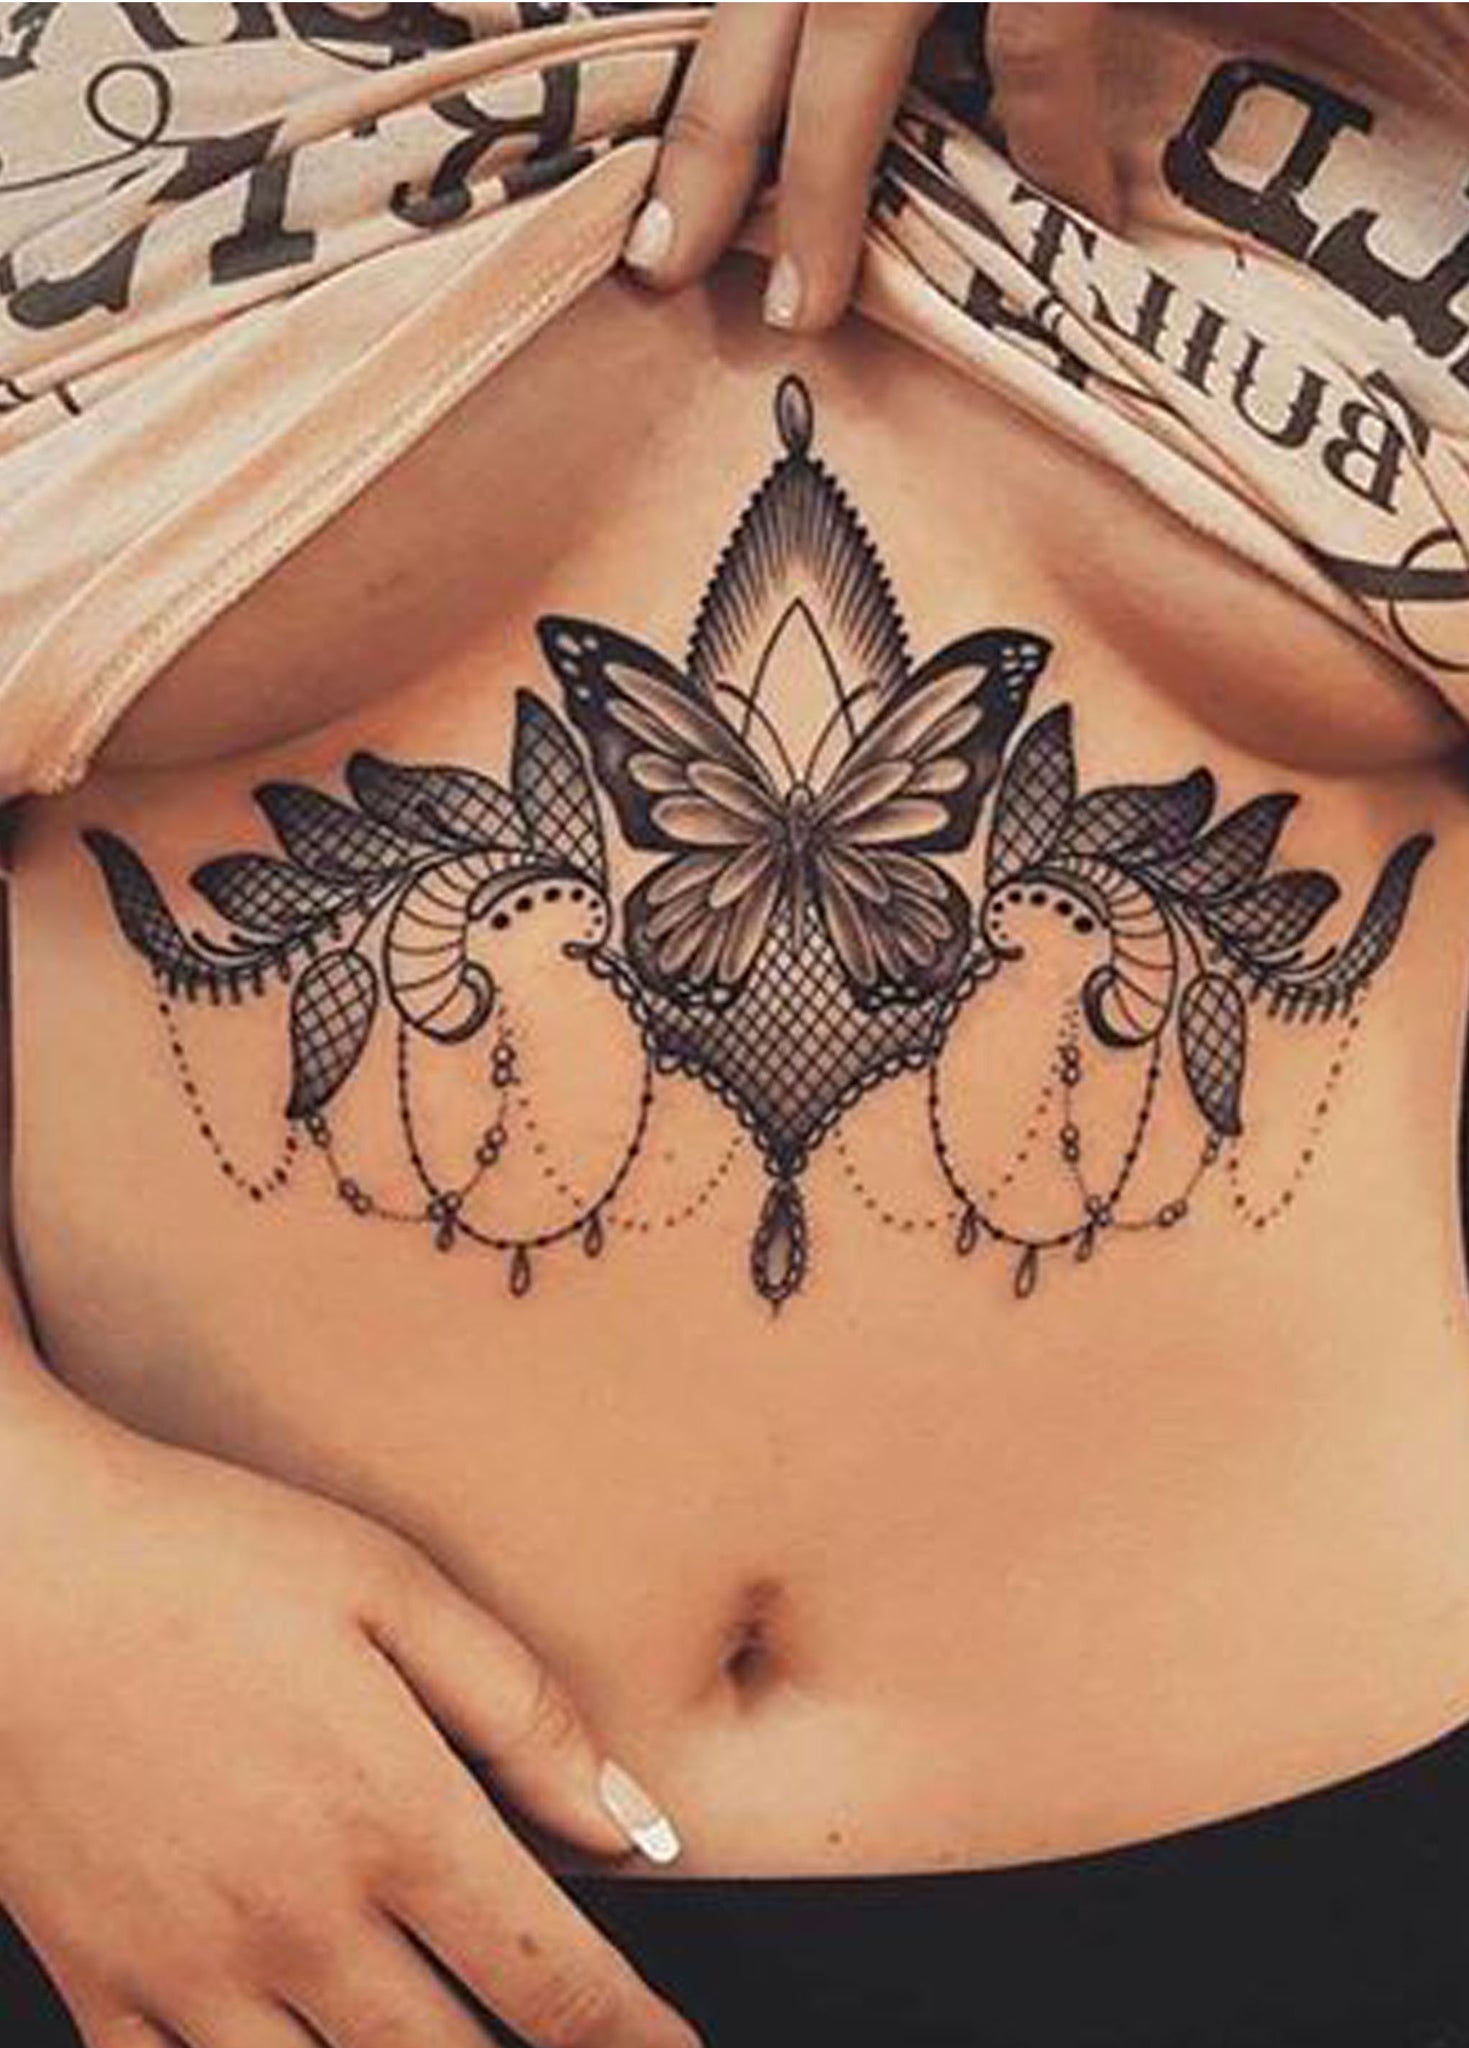 Women's Unique Butterfly Sternum Tattoo Ideas - Cool Chandelier Lace Chest Tat -  ideas de mariposas esternón tatuaje para mujeres - www.MyBodiArt.com #tattoos